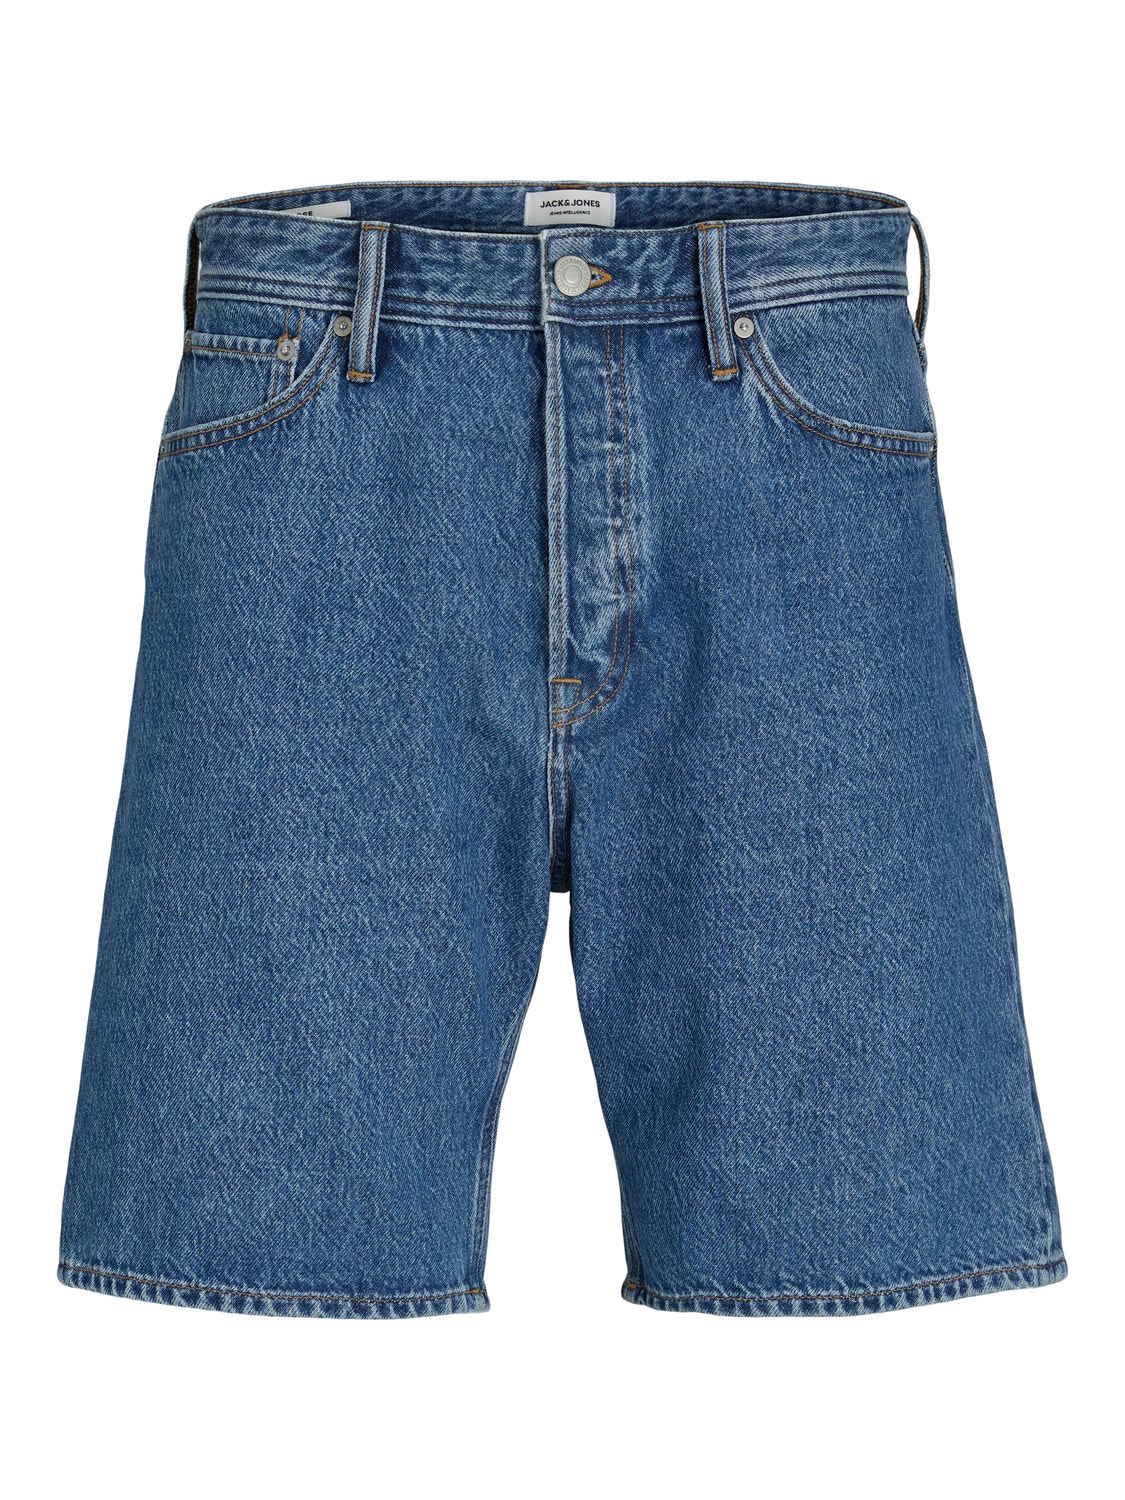 Jack & Jones Loose Fit Jeans Shorts -Blue Denim - 12249067